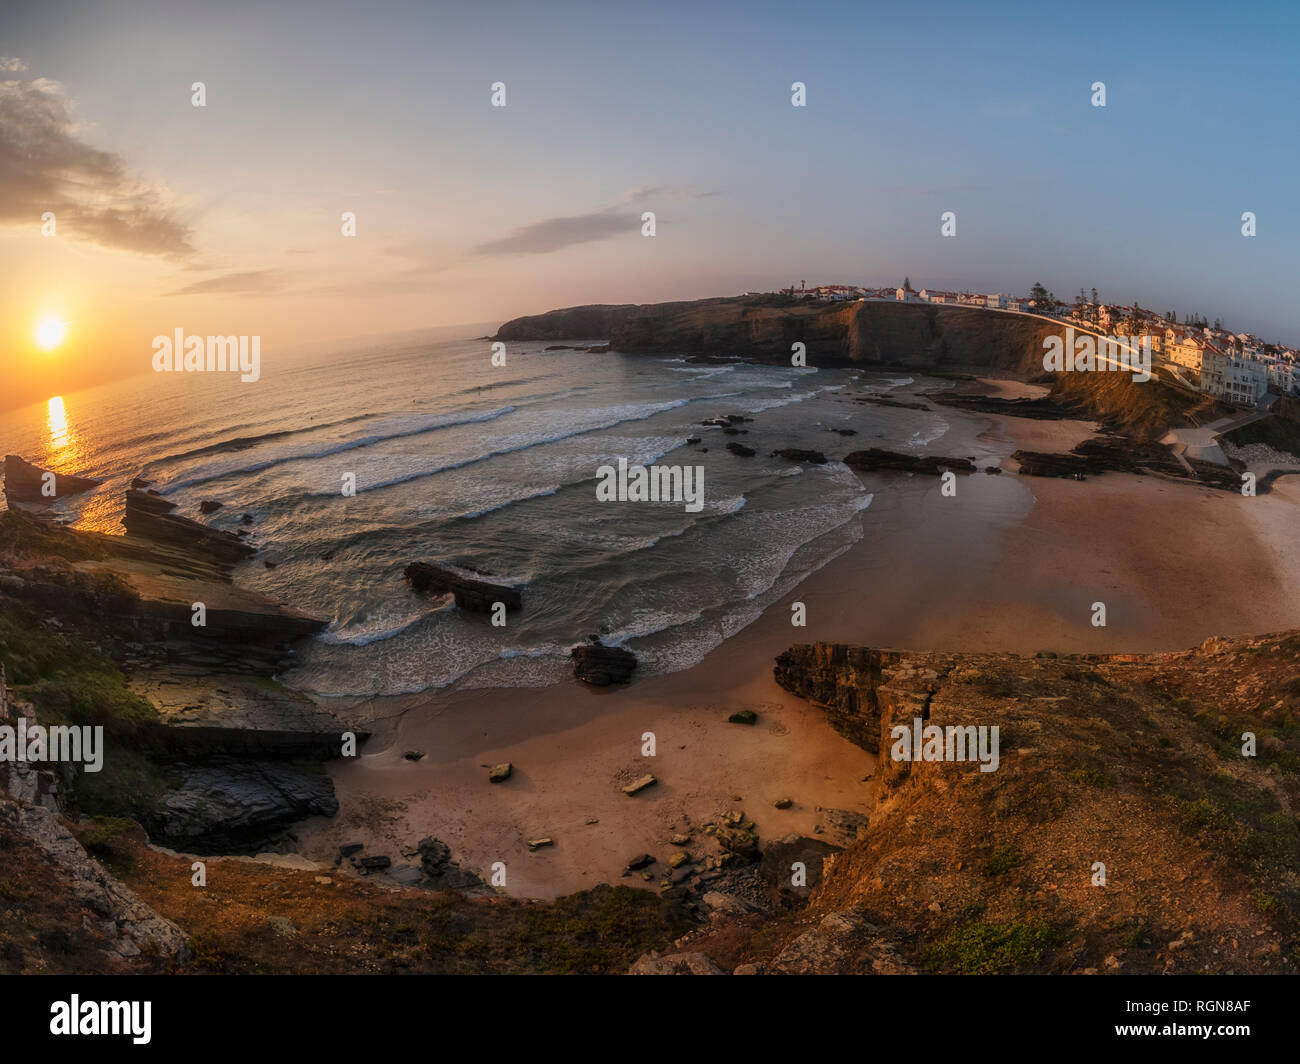 Portugal, Alentejo, Zambujeira do Mar, Praia dos Alteirinhos, rock formations at the beach in the evening Stock Photo